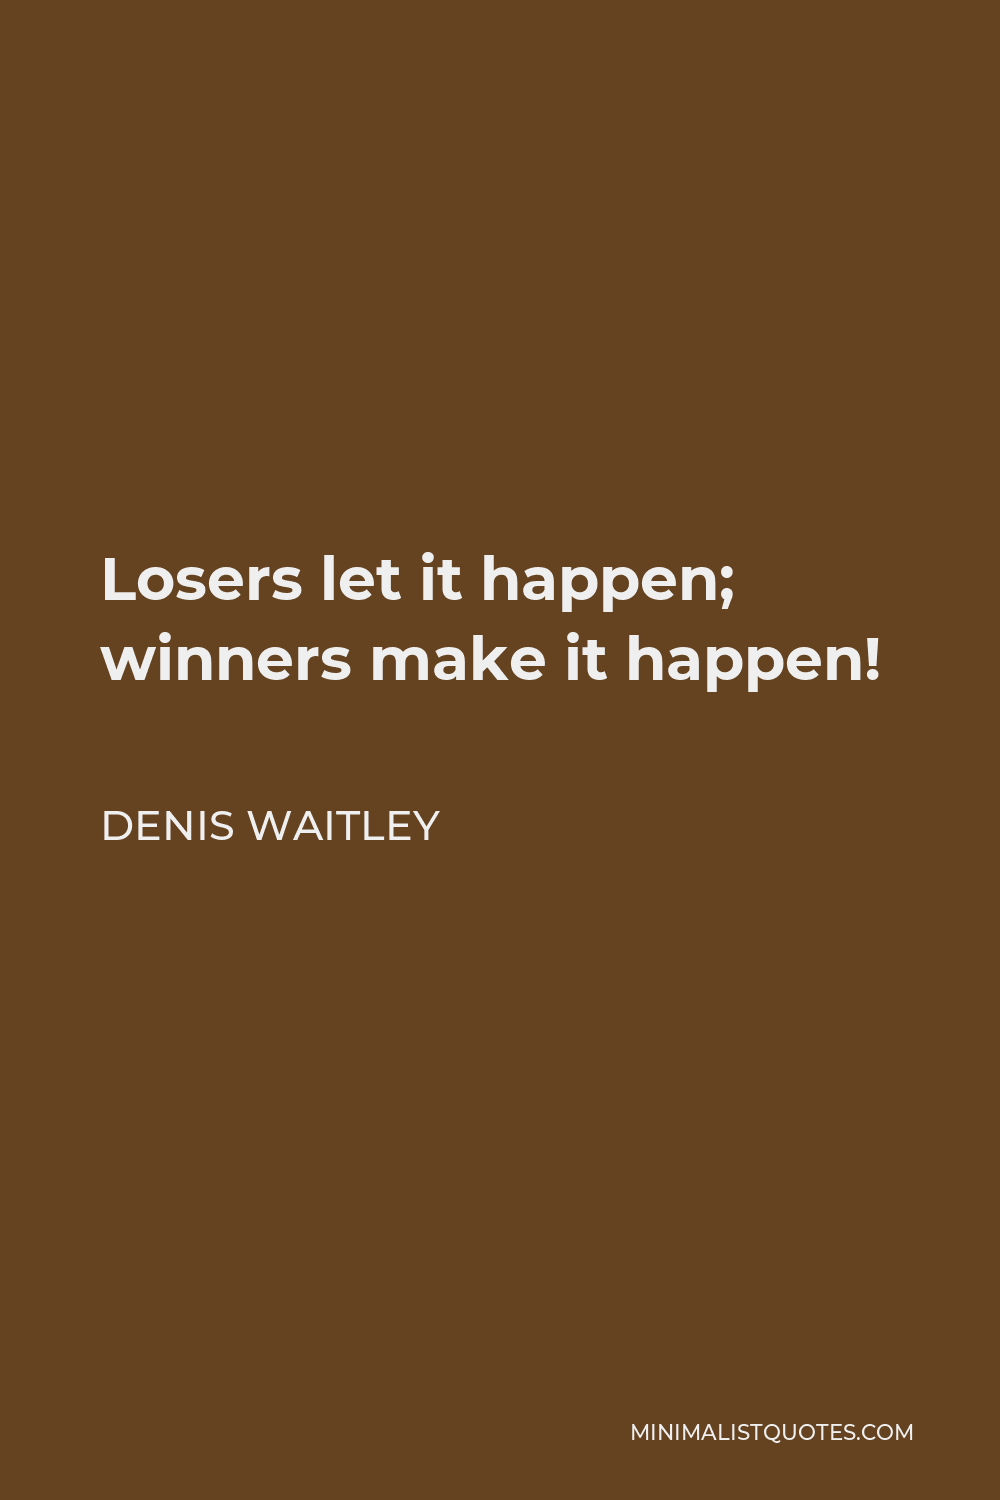 Denis Waitley Quote - Losers let it happen; winners make it happen!